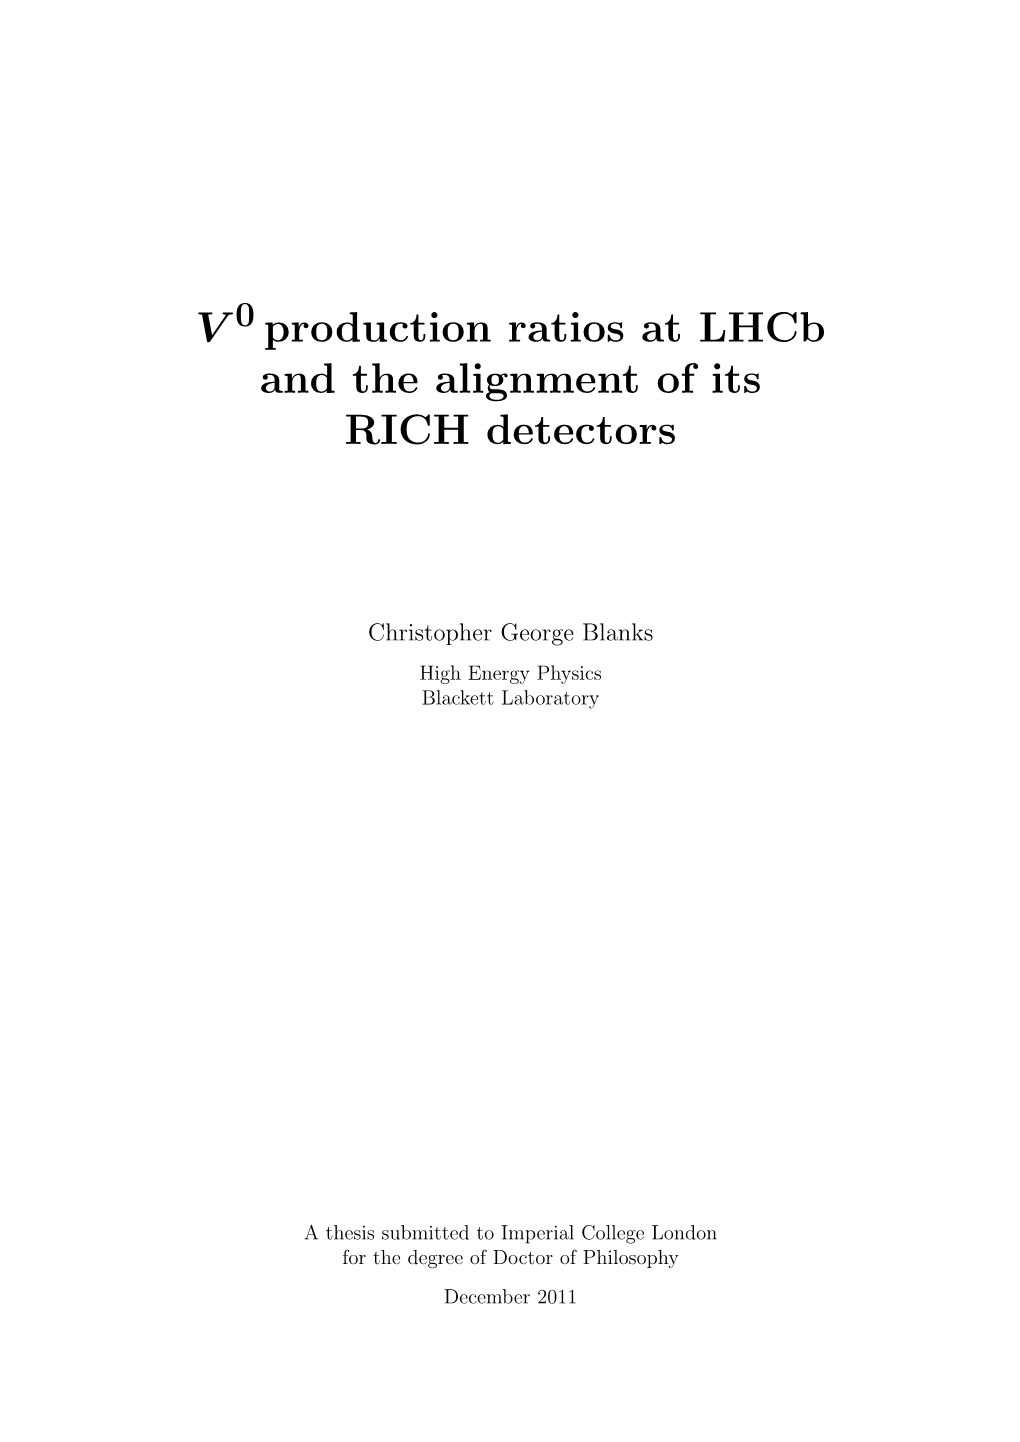 V-Zero Production Ratios at Lhcb and the Alignment of Its RICH Detectors